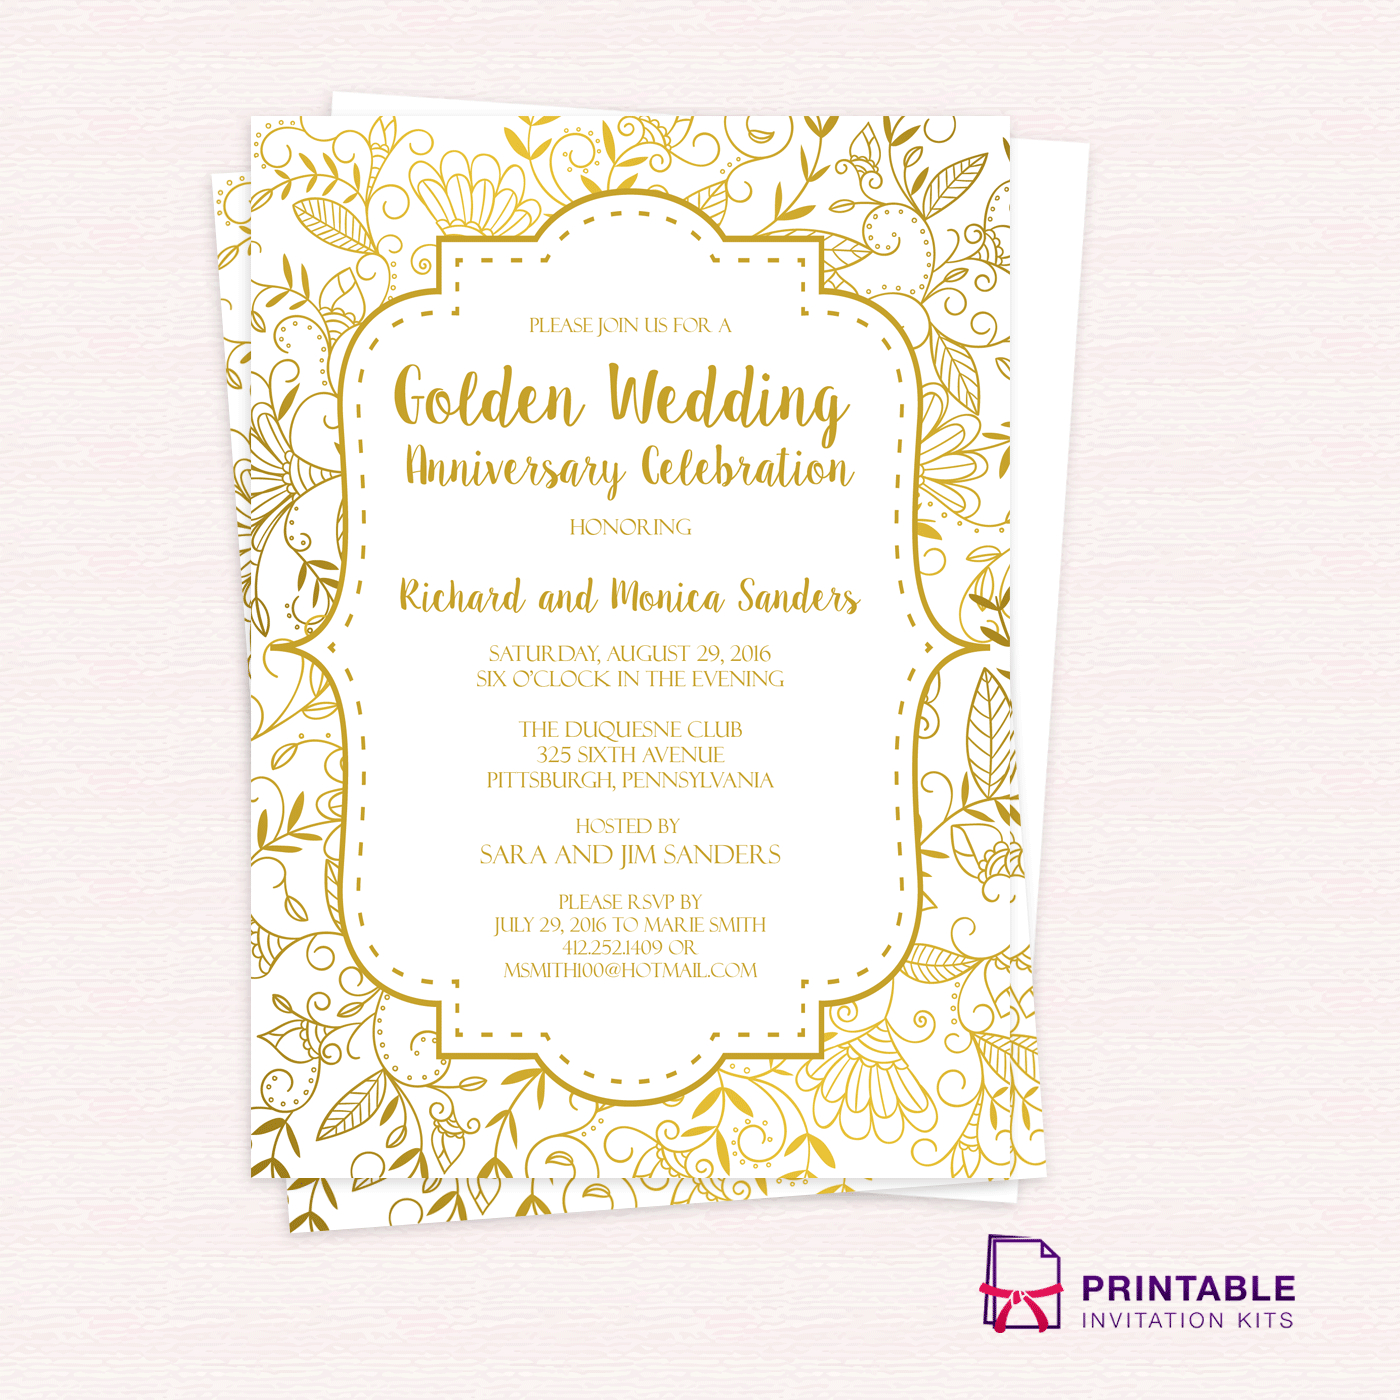 Golden Wedding Anniversary Invitation Template Wedding Invitation with dimensions 1400 X 1400